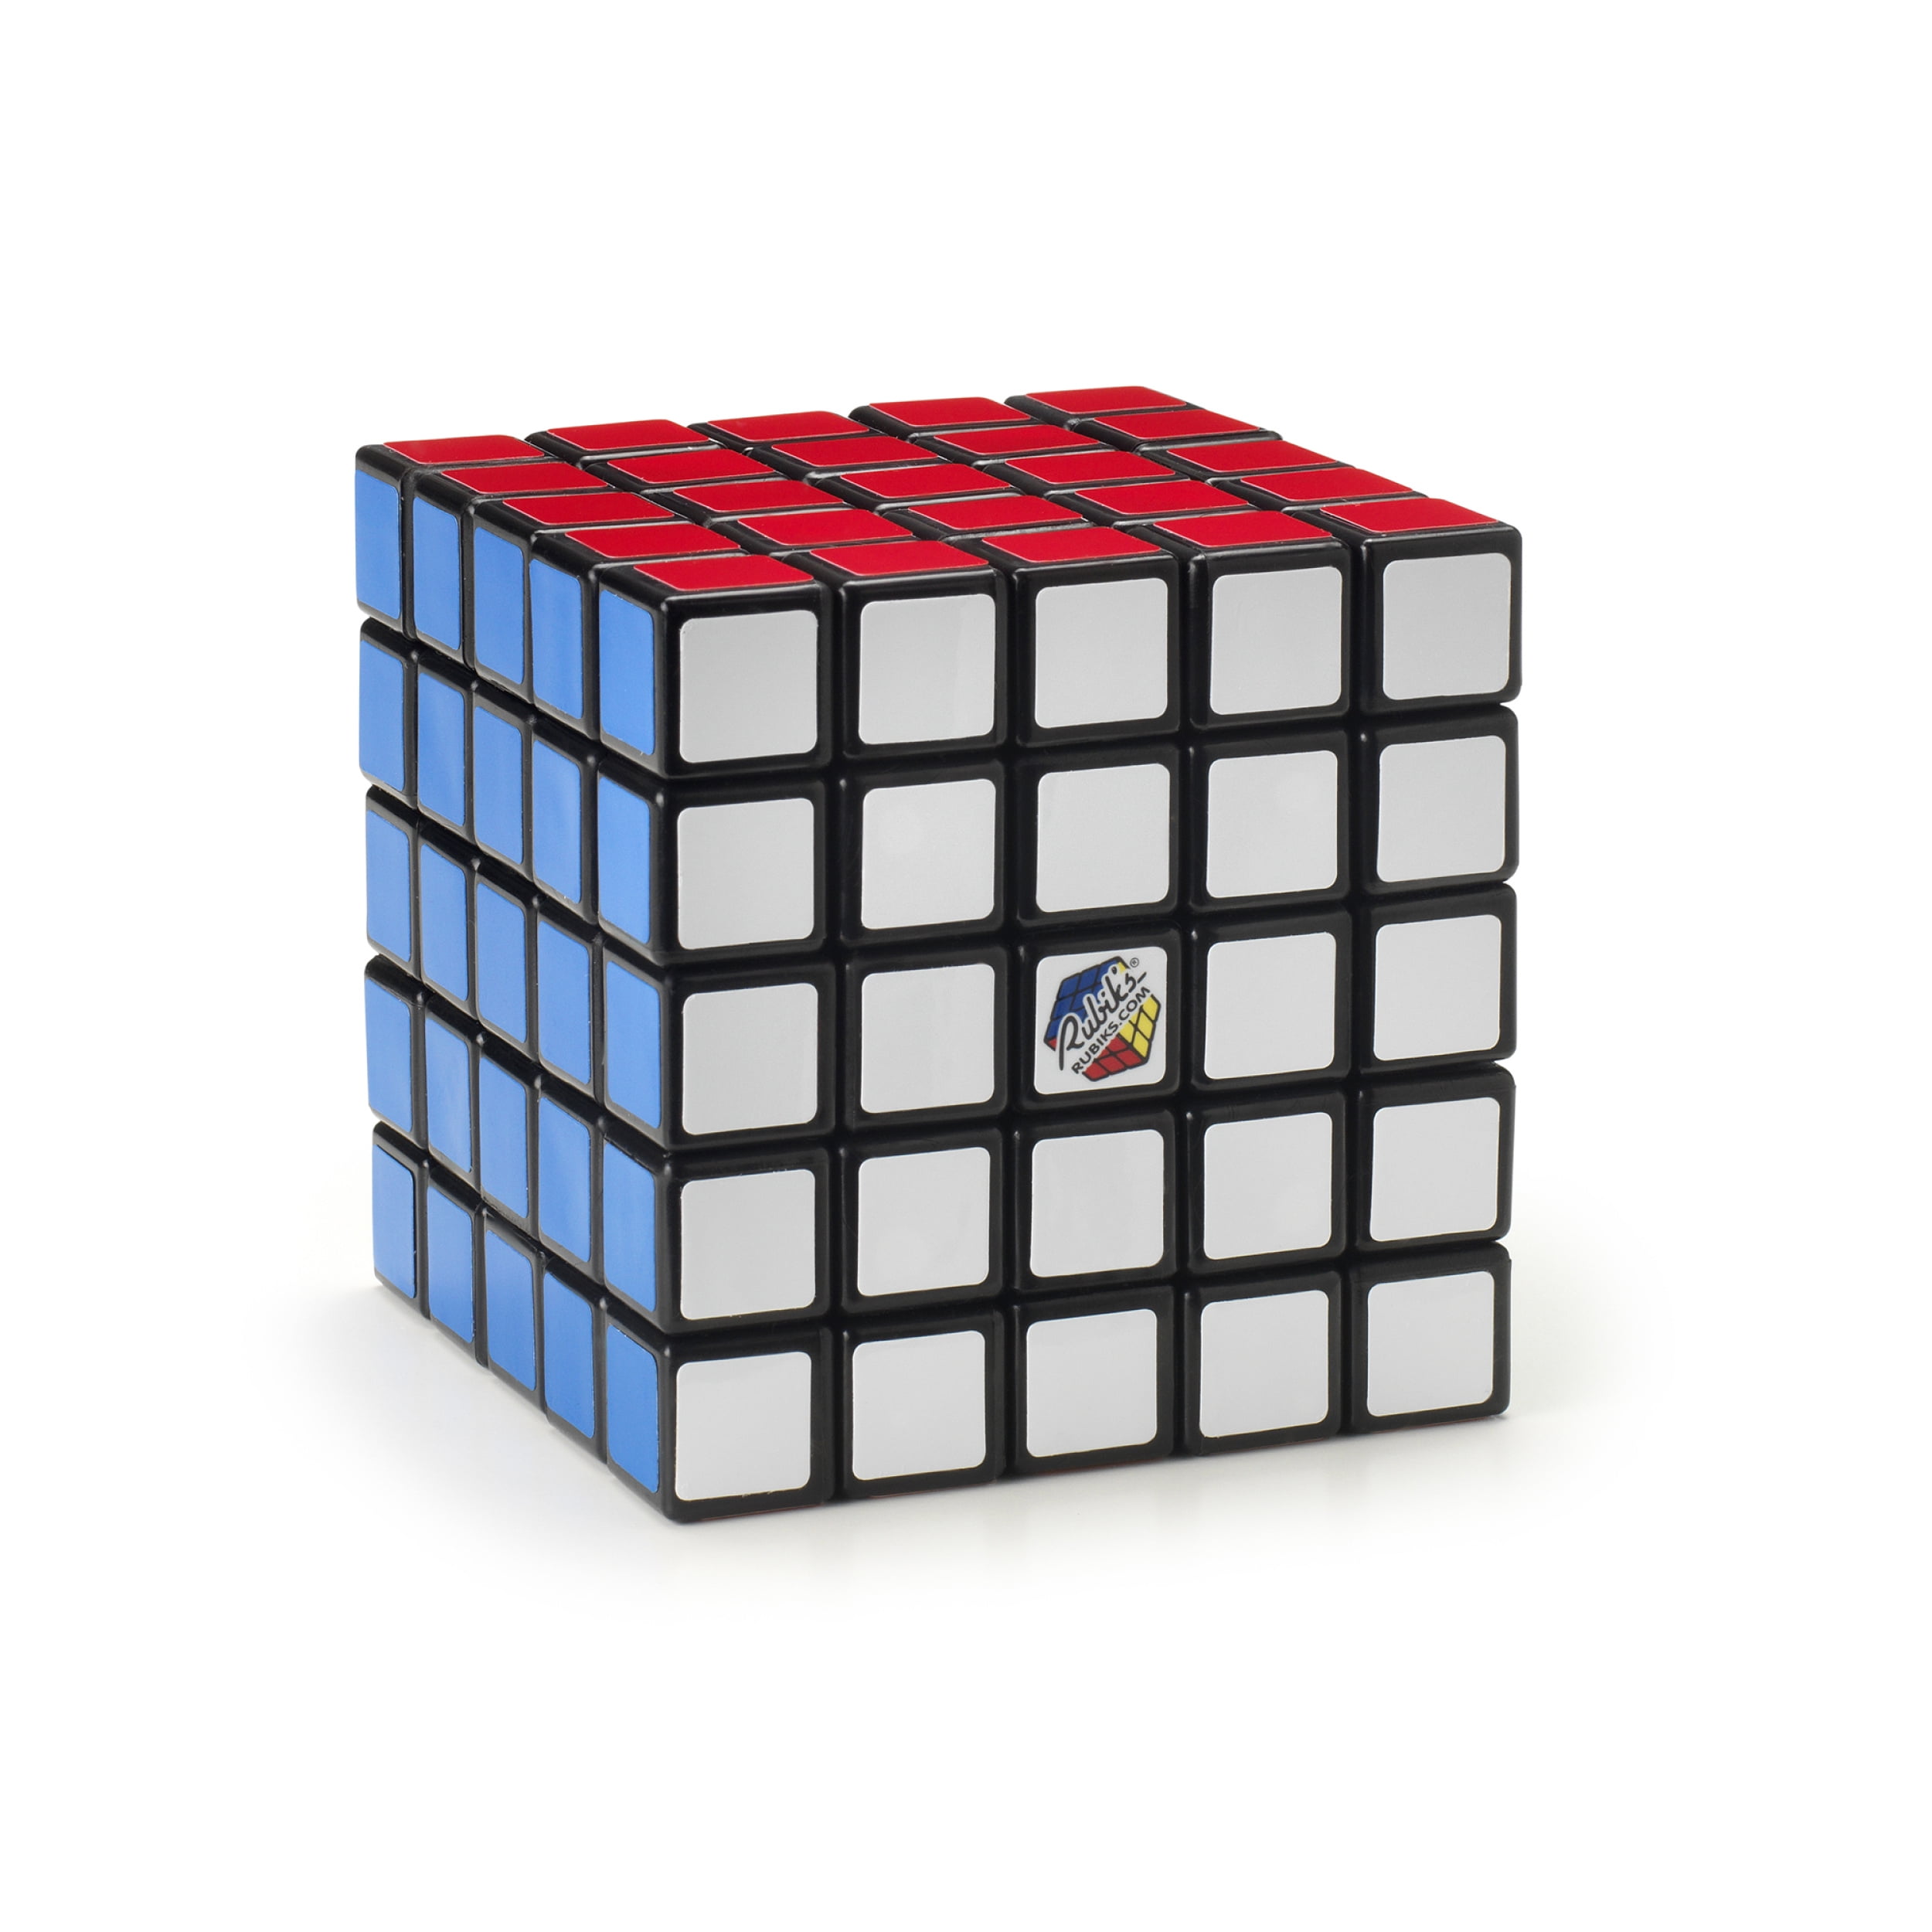 NEW IN BOX  Drumond Park 3 x 3 x 3 Rubik's Rubiks Cube & Rubik's 360 Puzzle 